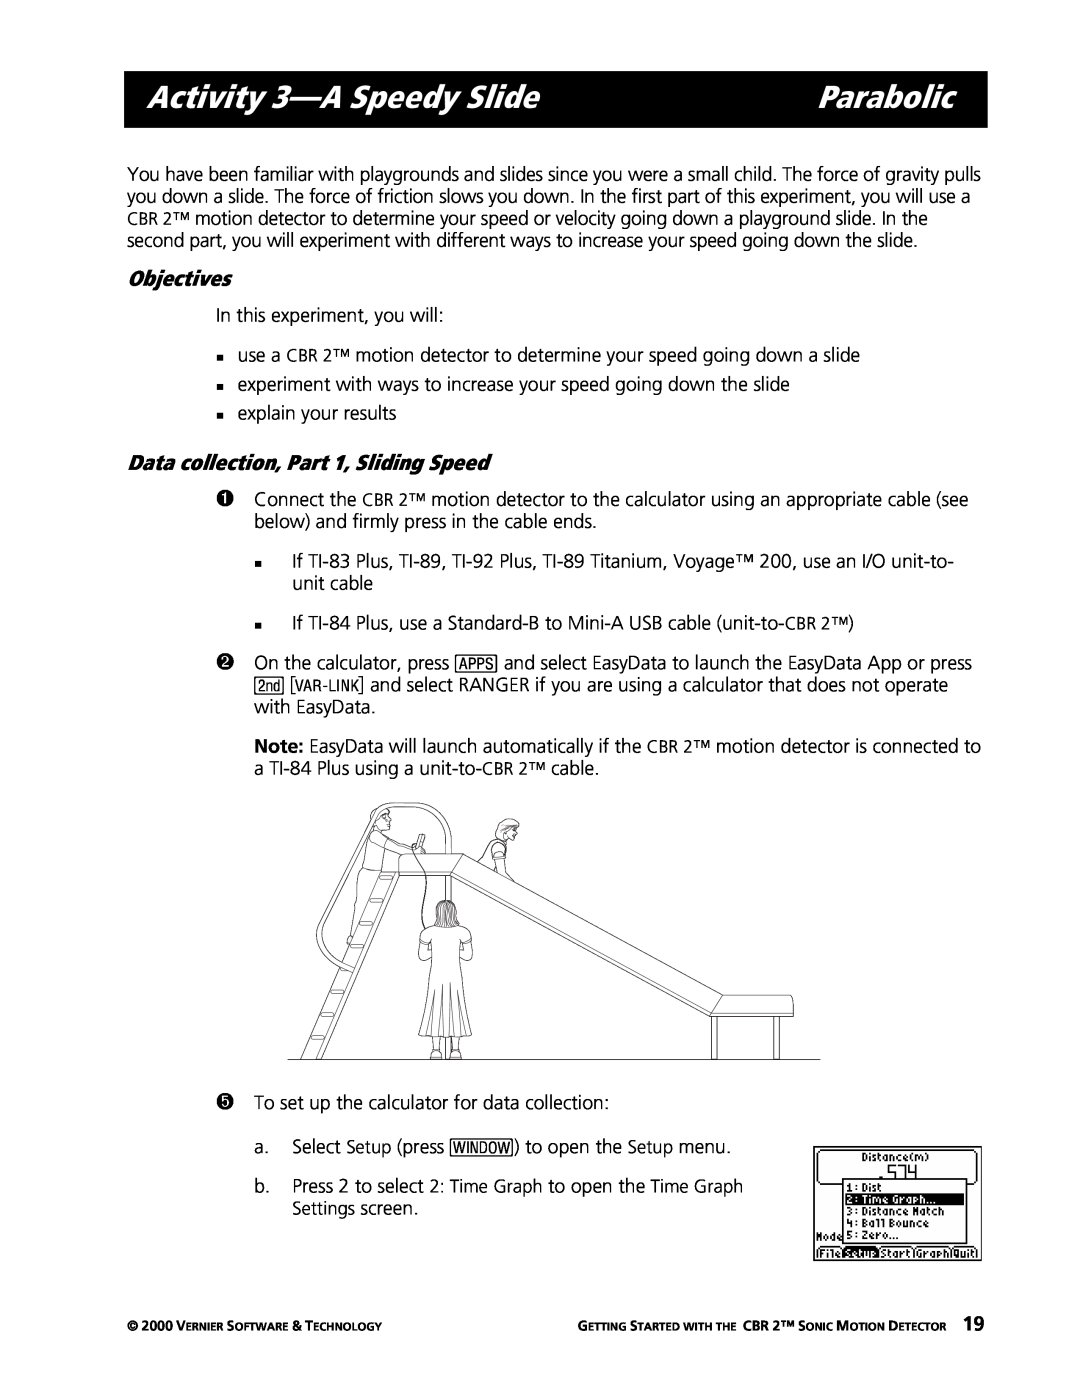 Texas Instruments CBR 2 manual Parabolic, Activity 3-ASpeedy Slide, Objectives, Data collection, Part 1, Sliding Speed 